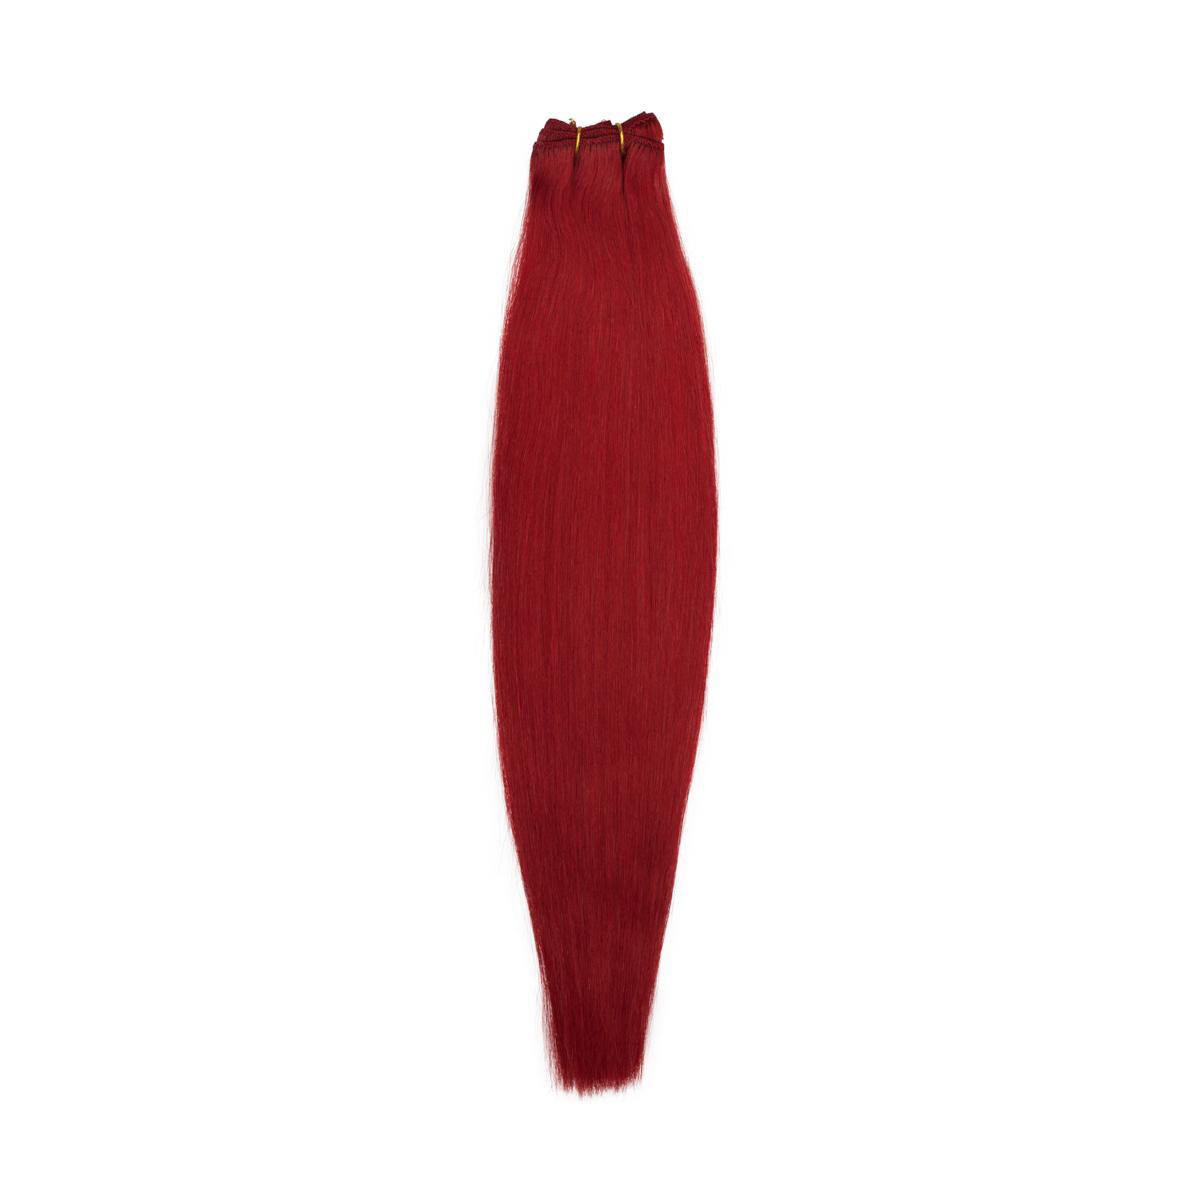 Hair Weft Original 6.0 Red Fire 50 cm